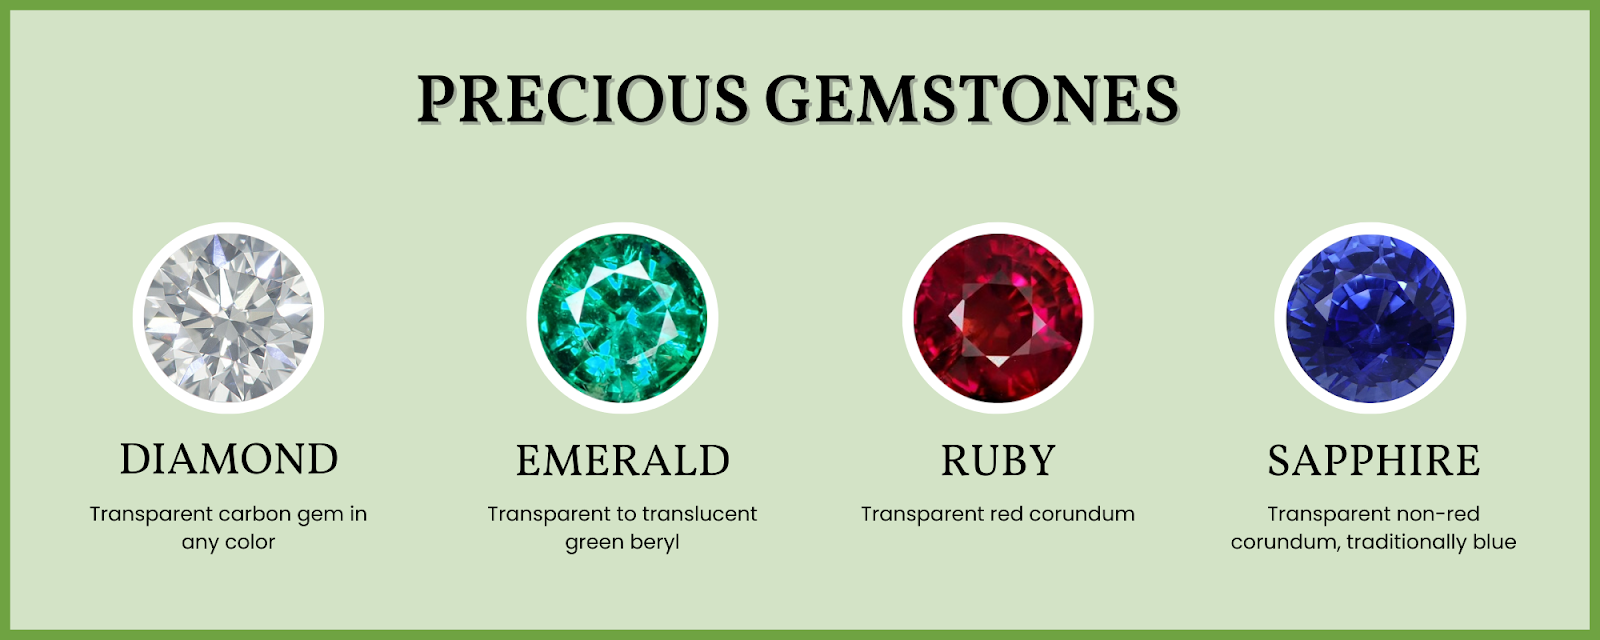 list of precious gemstones - diamond emerald ruby sapphire